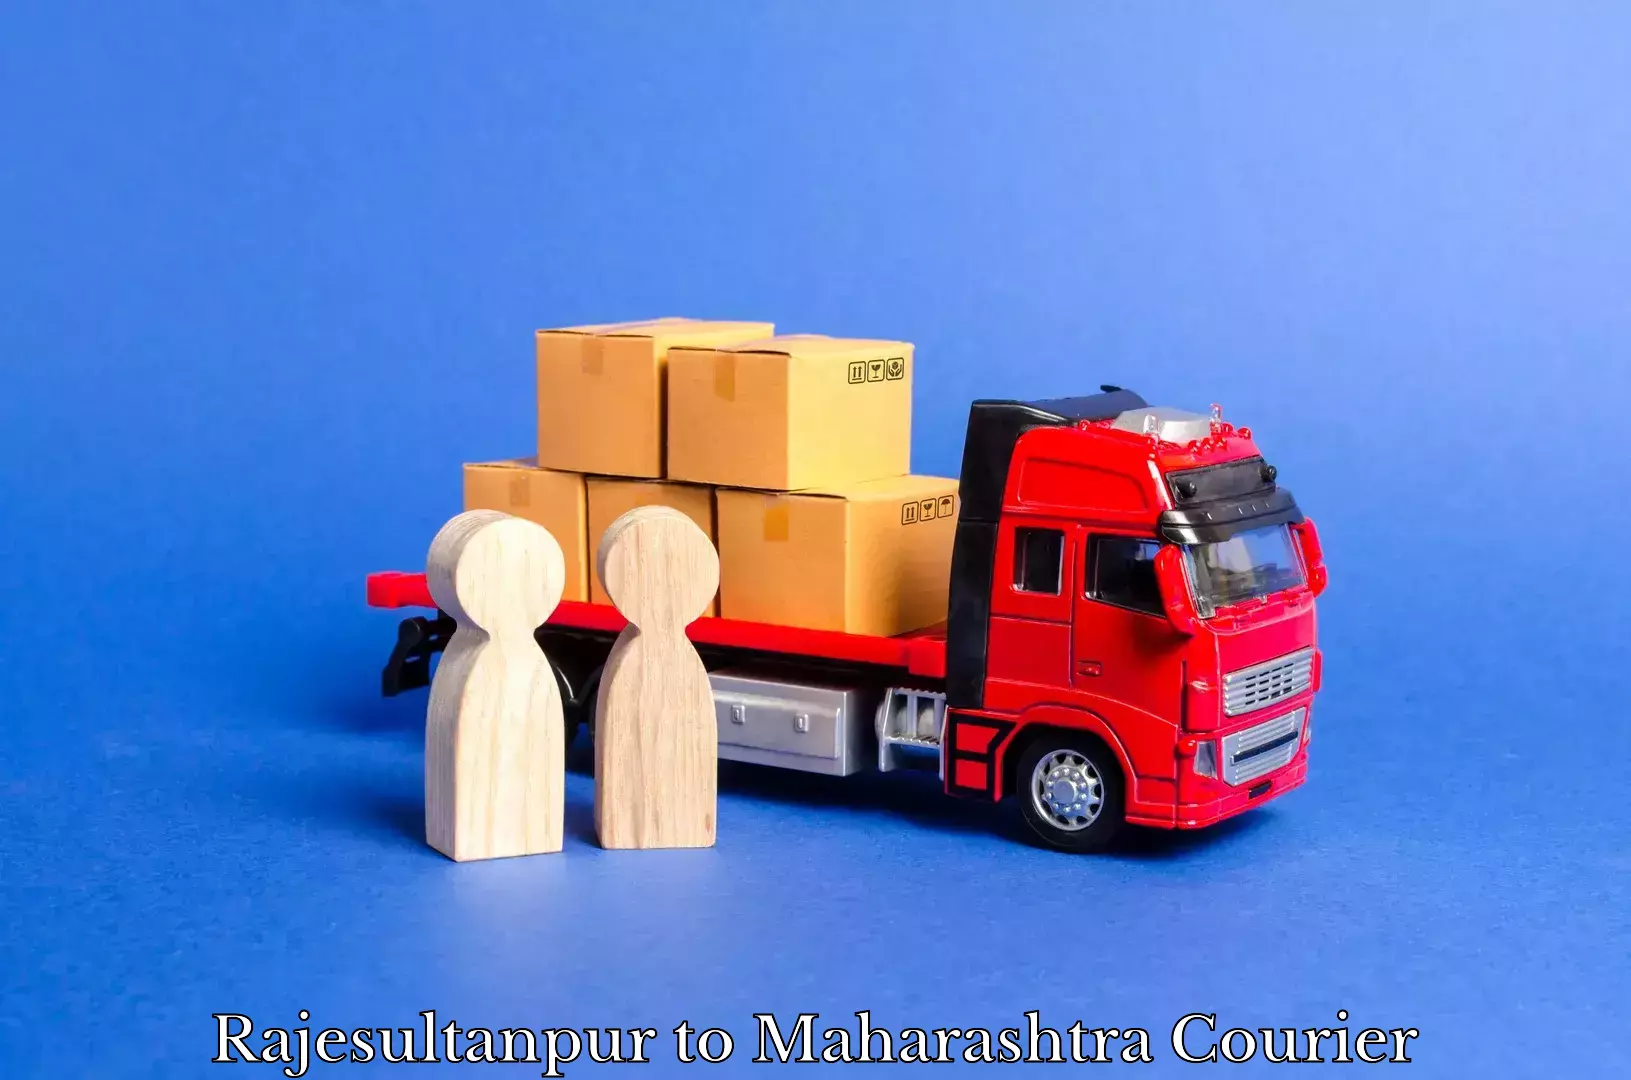 International parcel service Rajesultanpur to Maharashtra